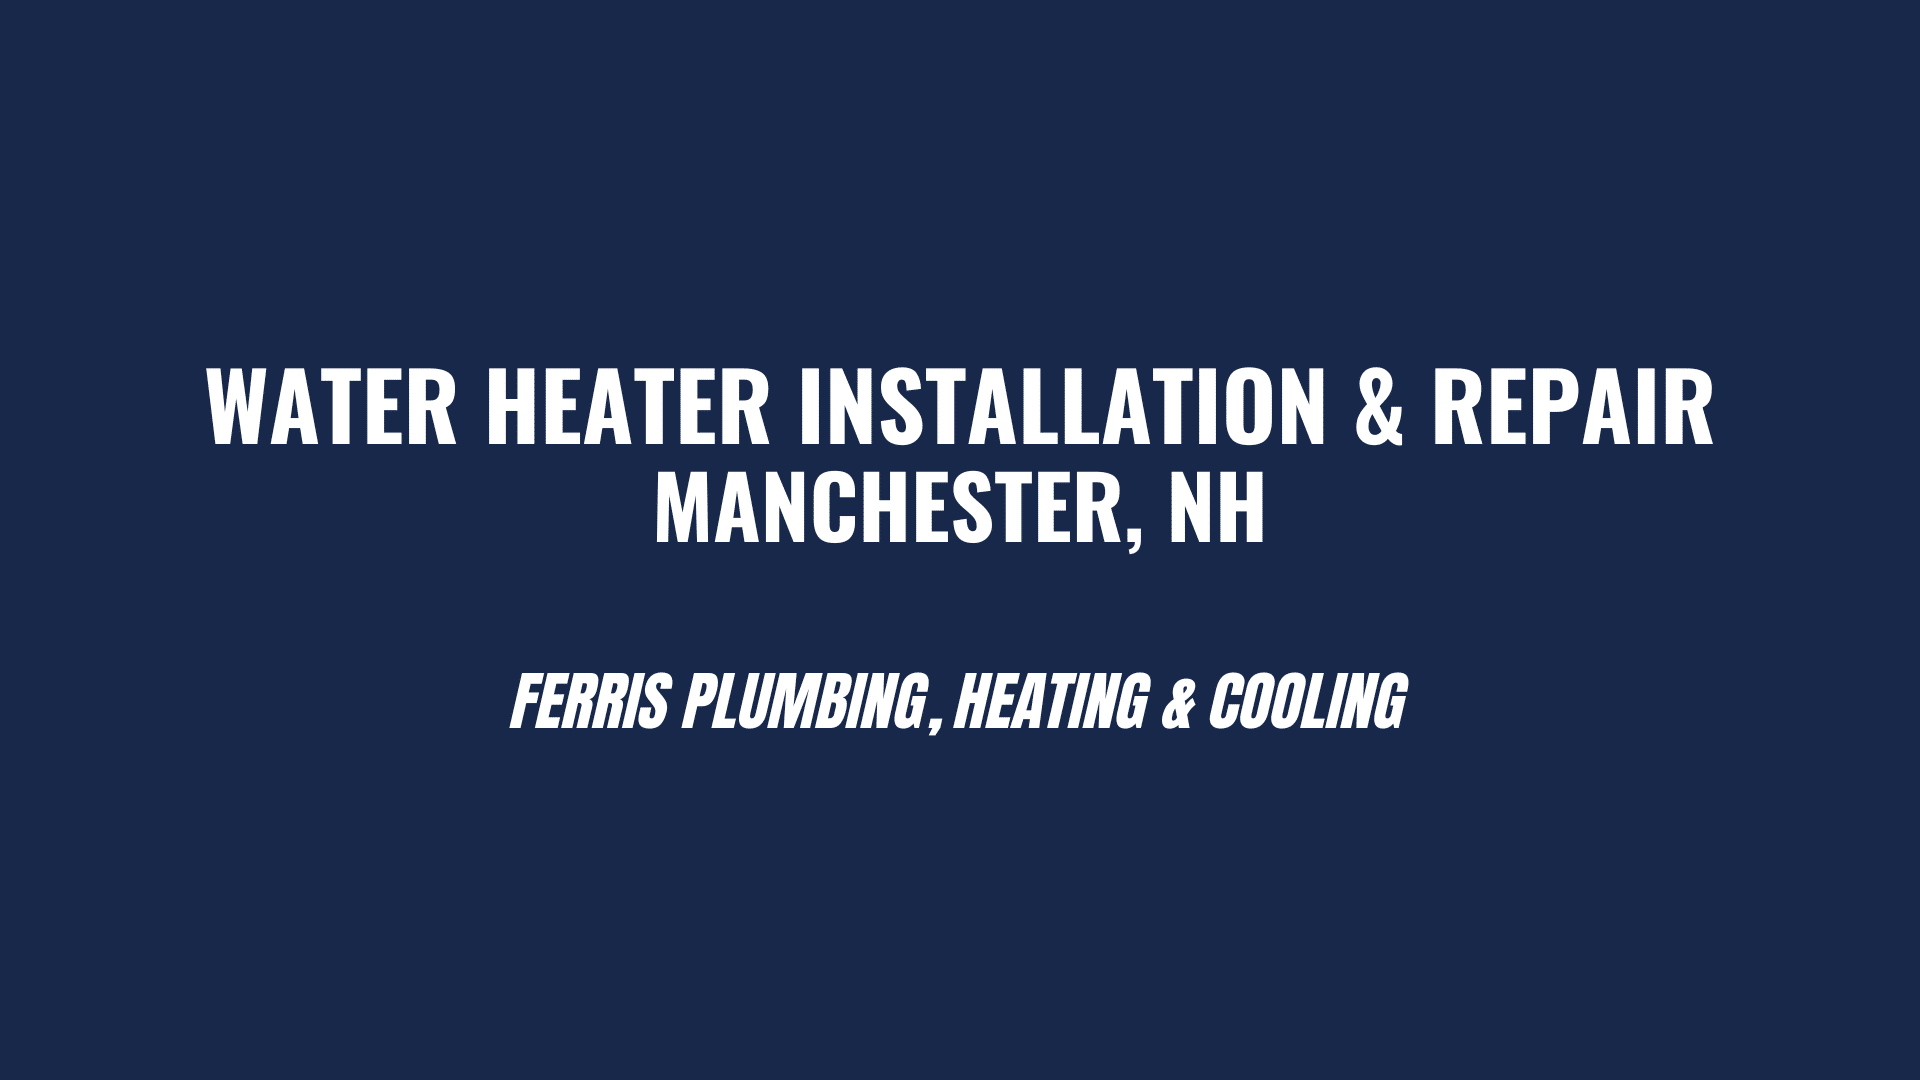 Water heater installation Manchester NH